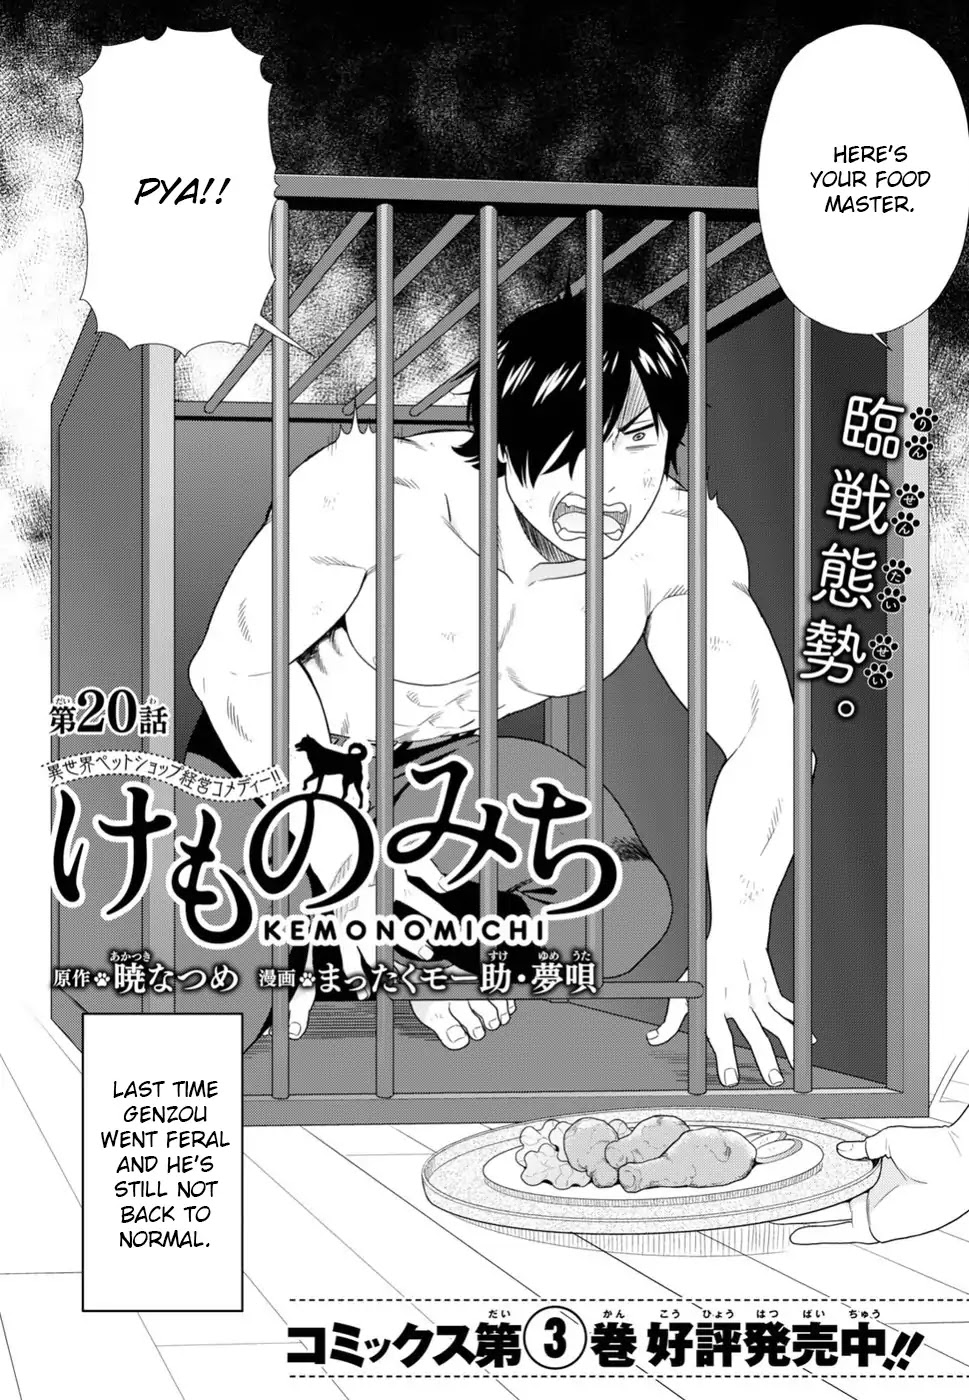 Kemono Michi (Natsume Akatsuki) Vol.4 Chapter 16: /20 - Picture 2